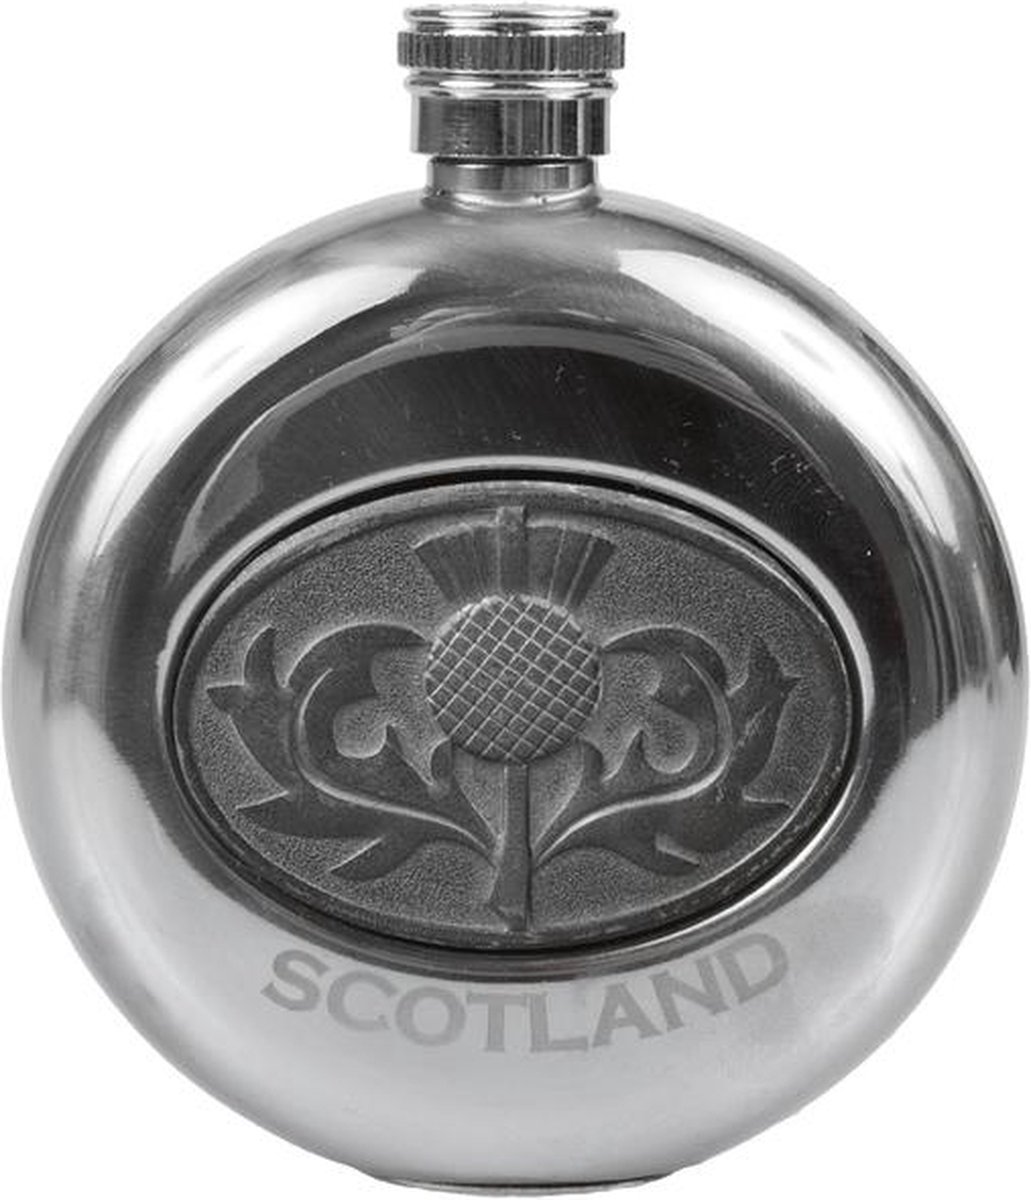 Highland Tartan Tweeds Heupfles Tistle Emblem Silver (A7807)